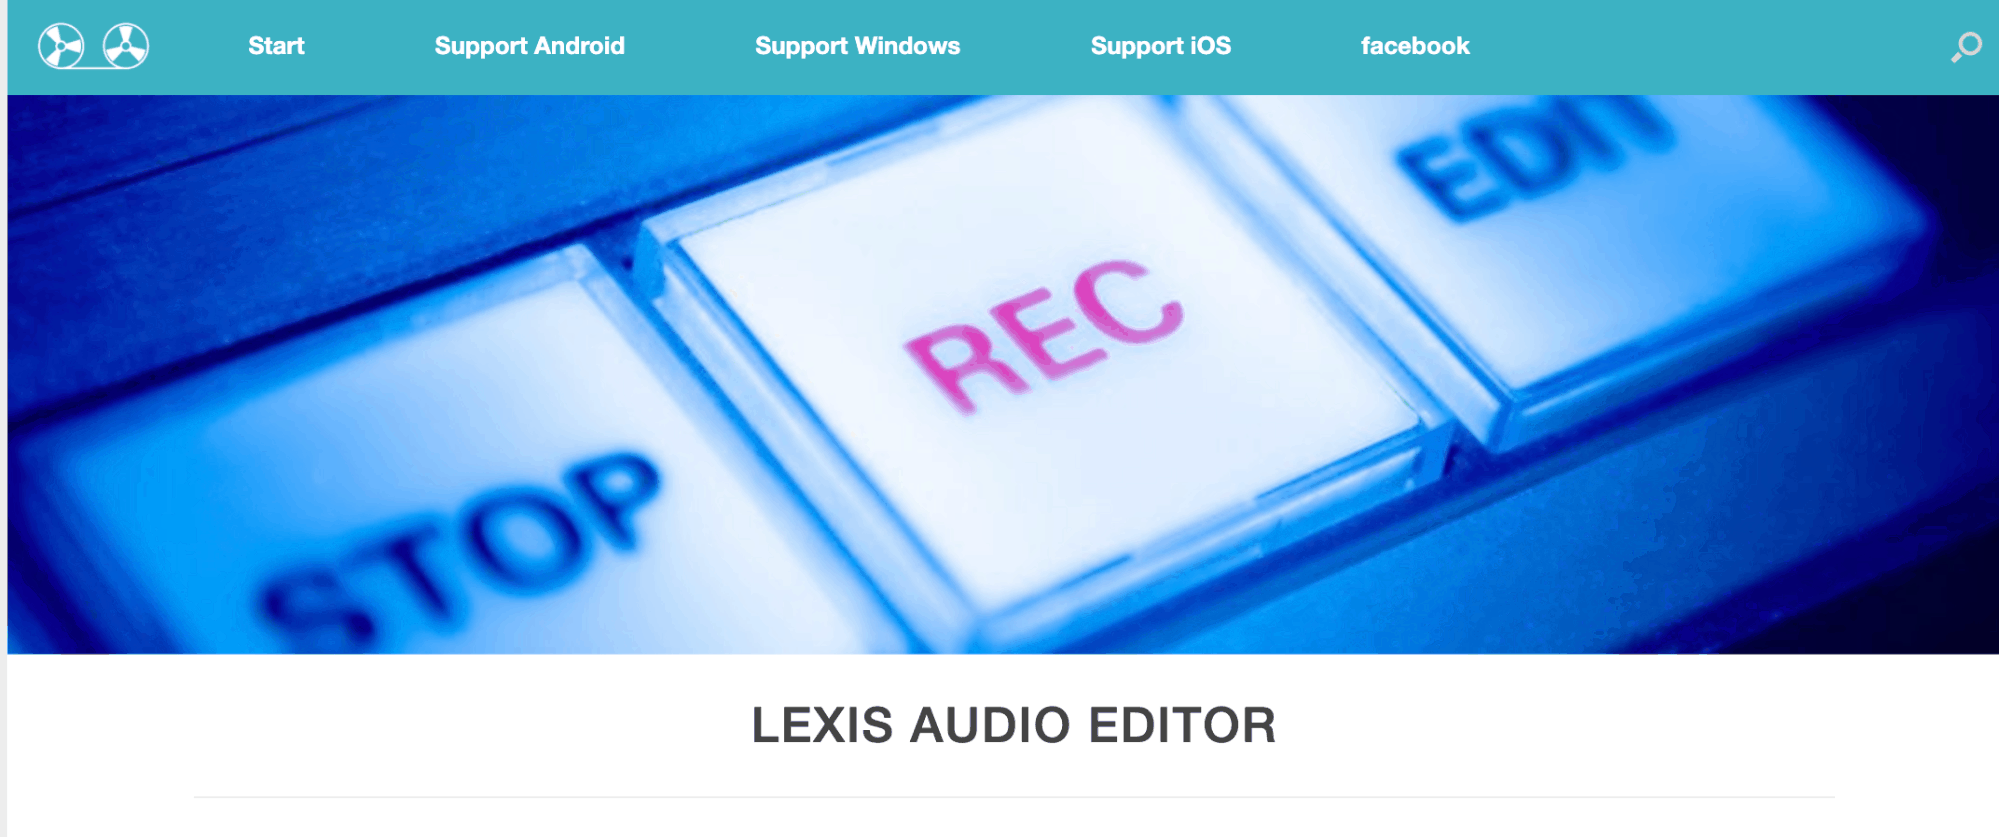 Best audio editing software - Lexis